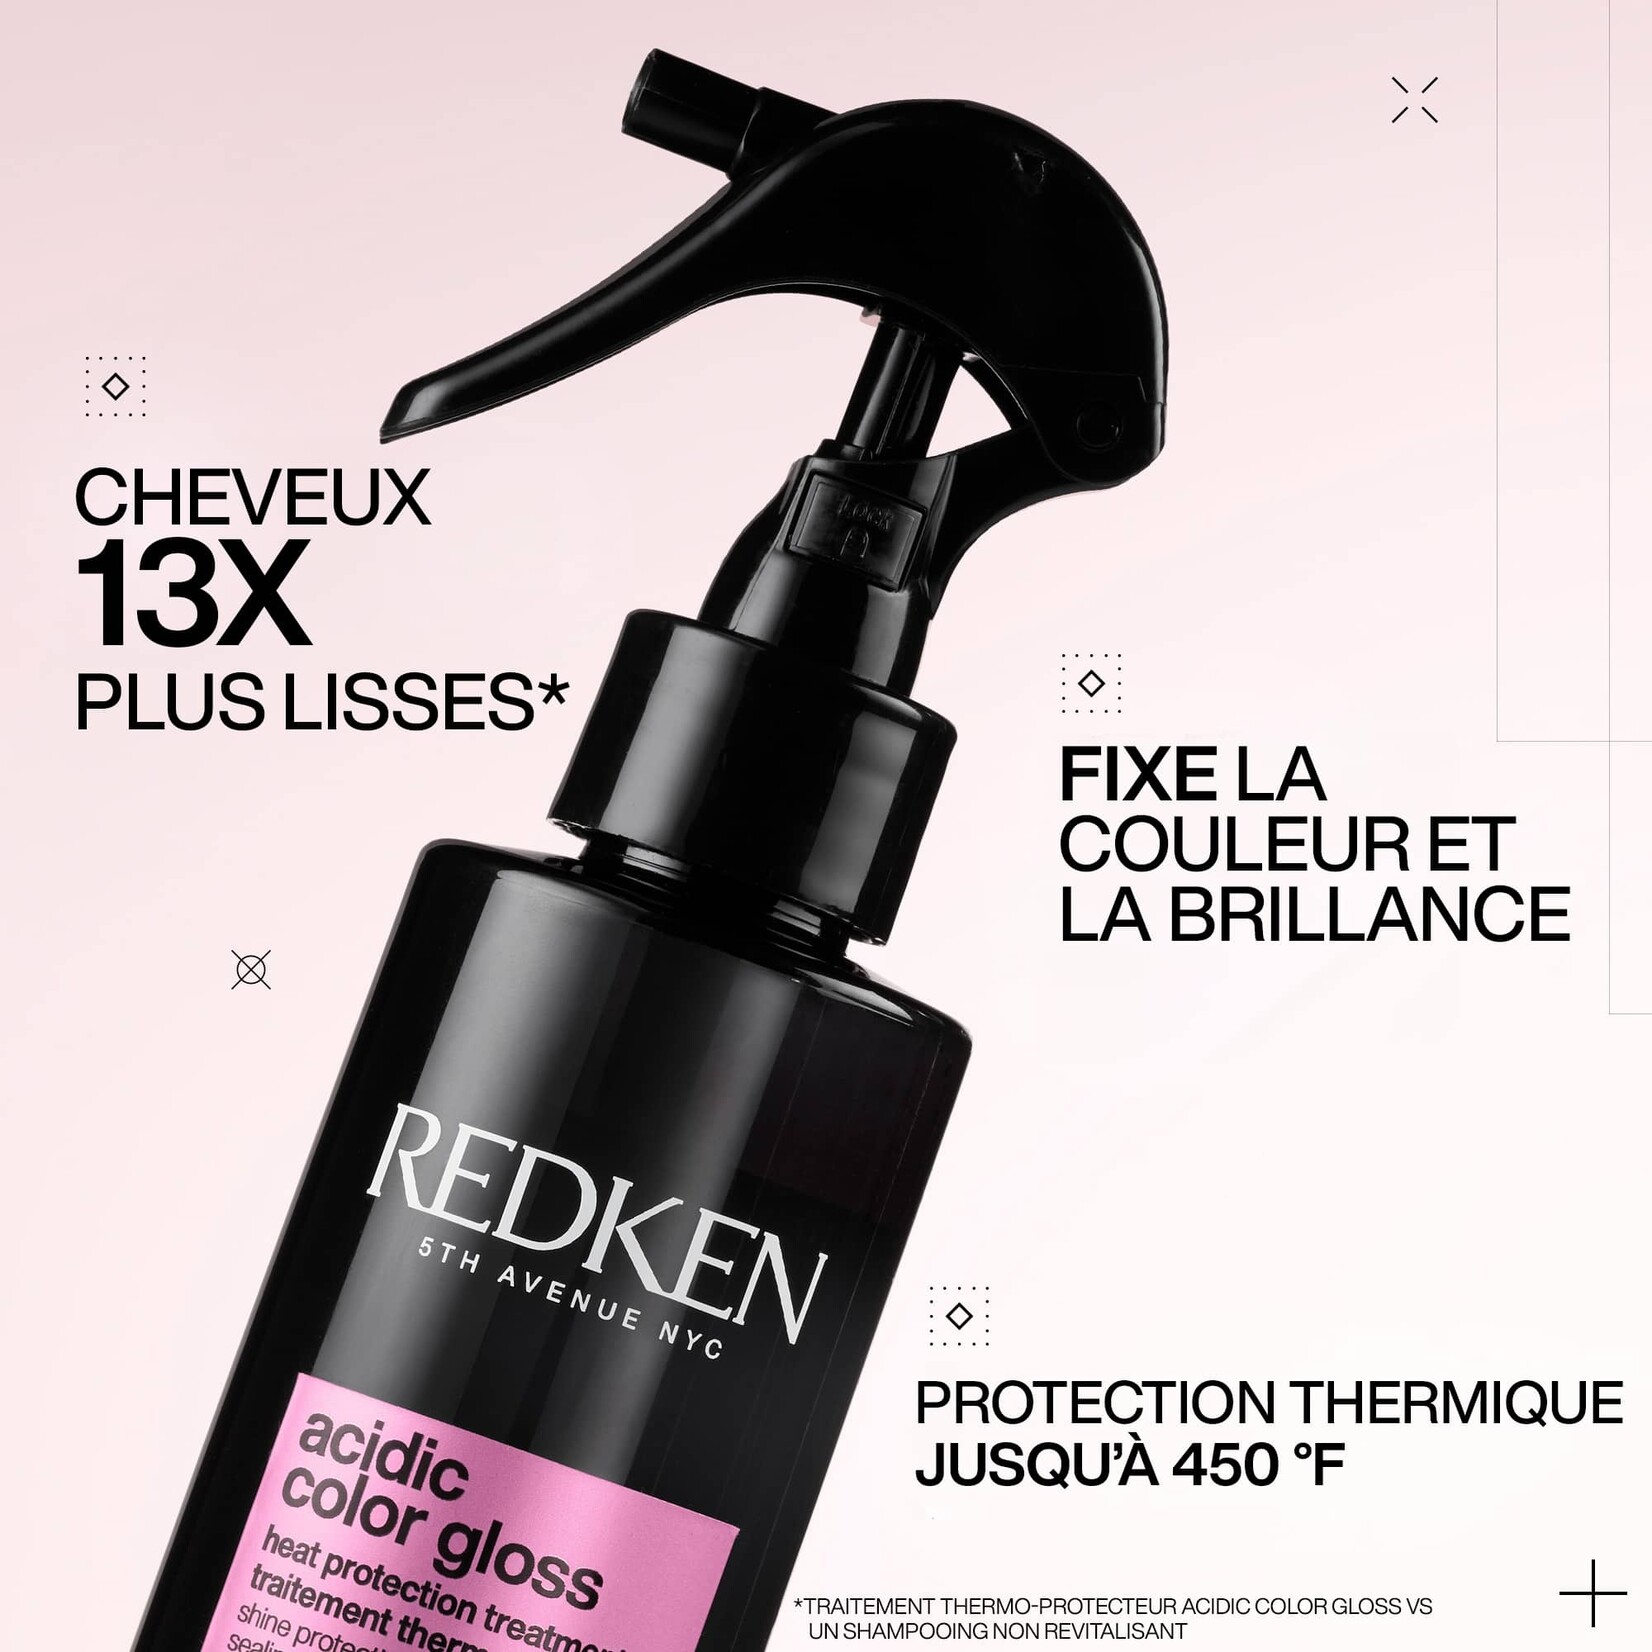 Redken Redken - Acidic color gloss - Heat protection treatment 200ml